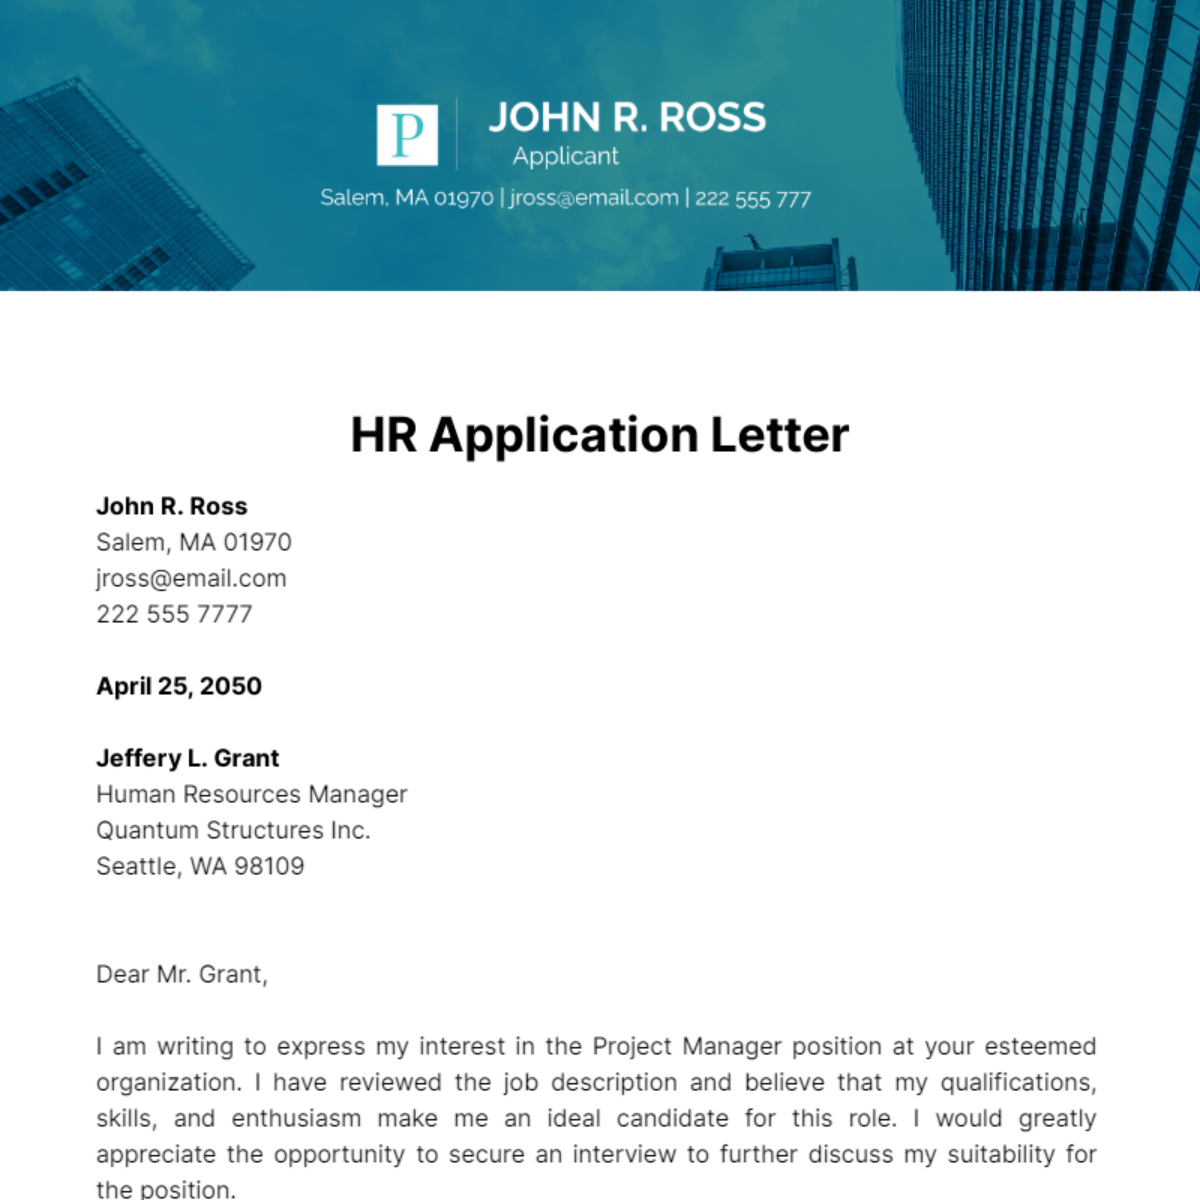 HR Application Letter Template